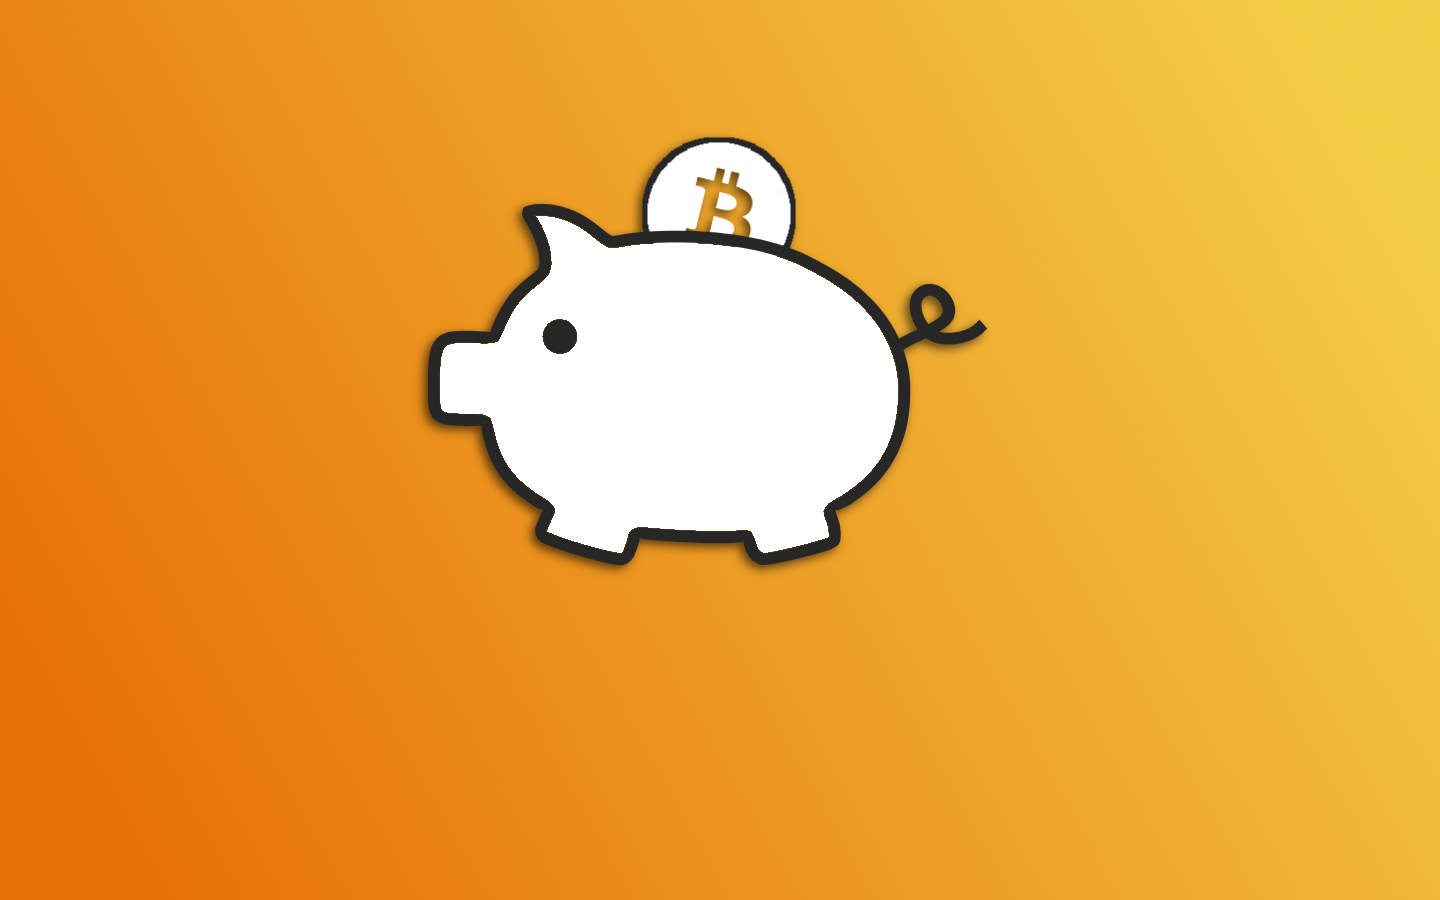 Clip art of a Bitcoin piggy bank